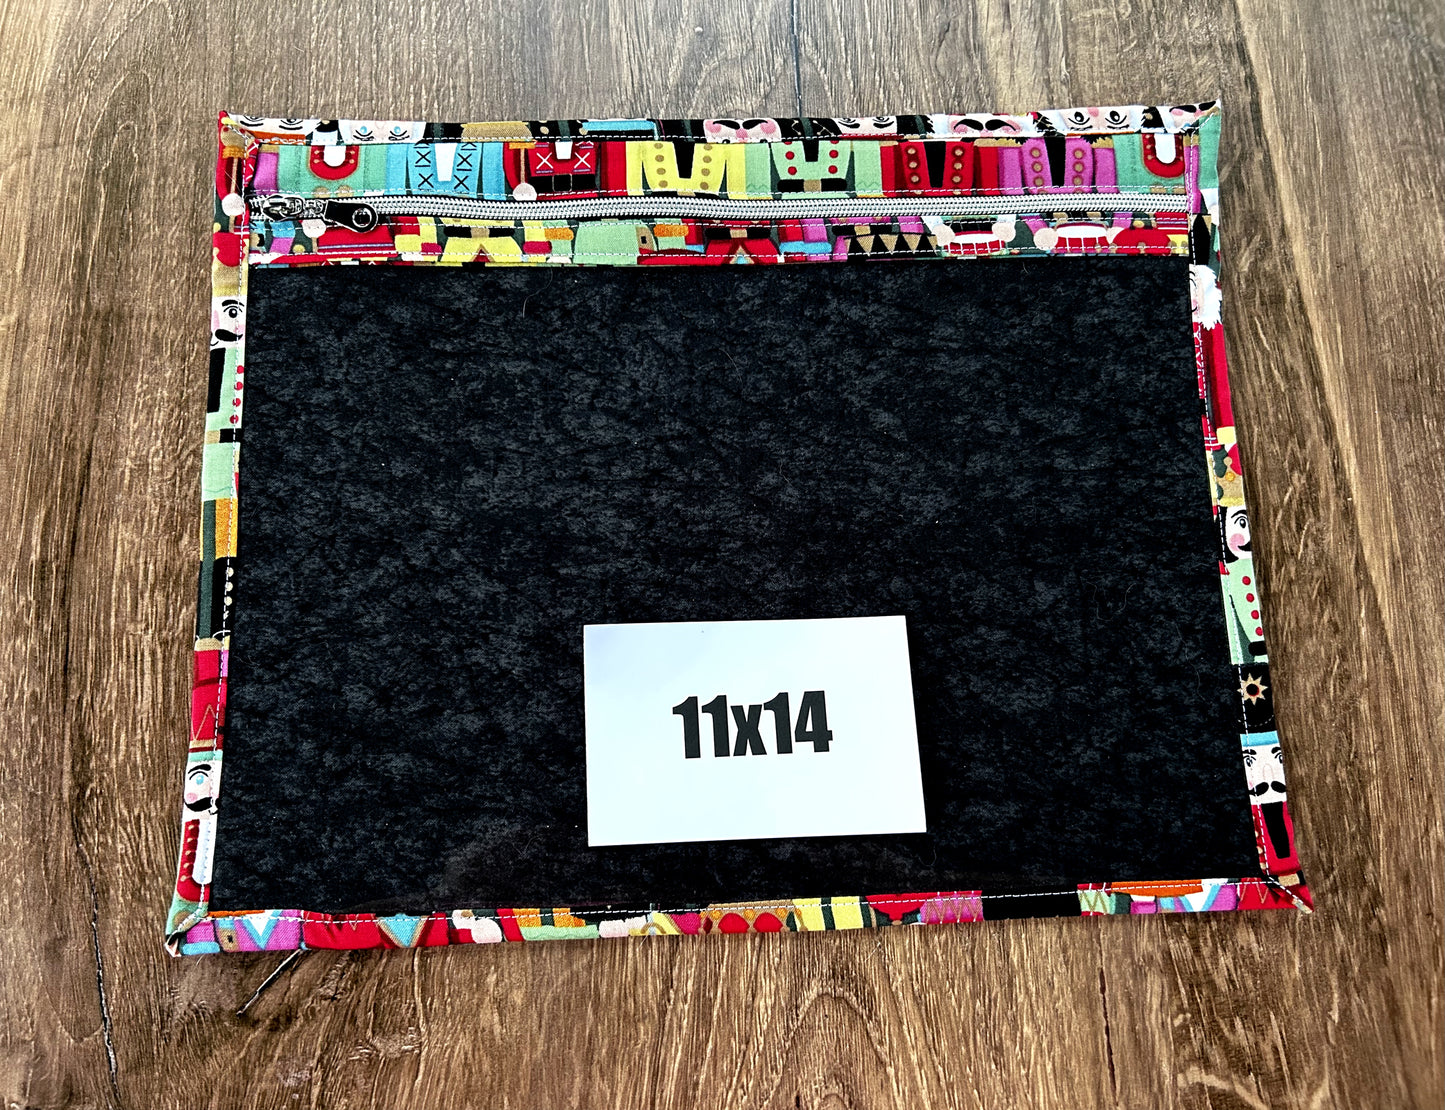 Vinyl Cross Stitch Project Bag - Embroidery bag - Knitting & Crochet Bag - Storage - Organizer - Nutcracker Project Bag - Notions